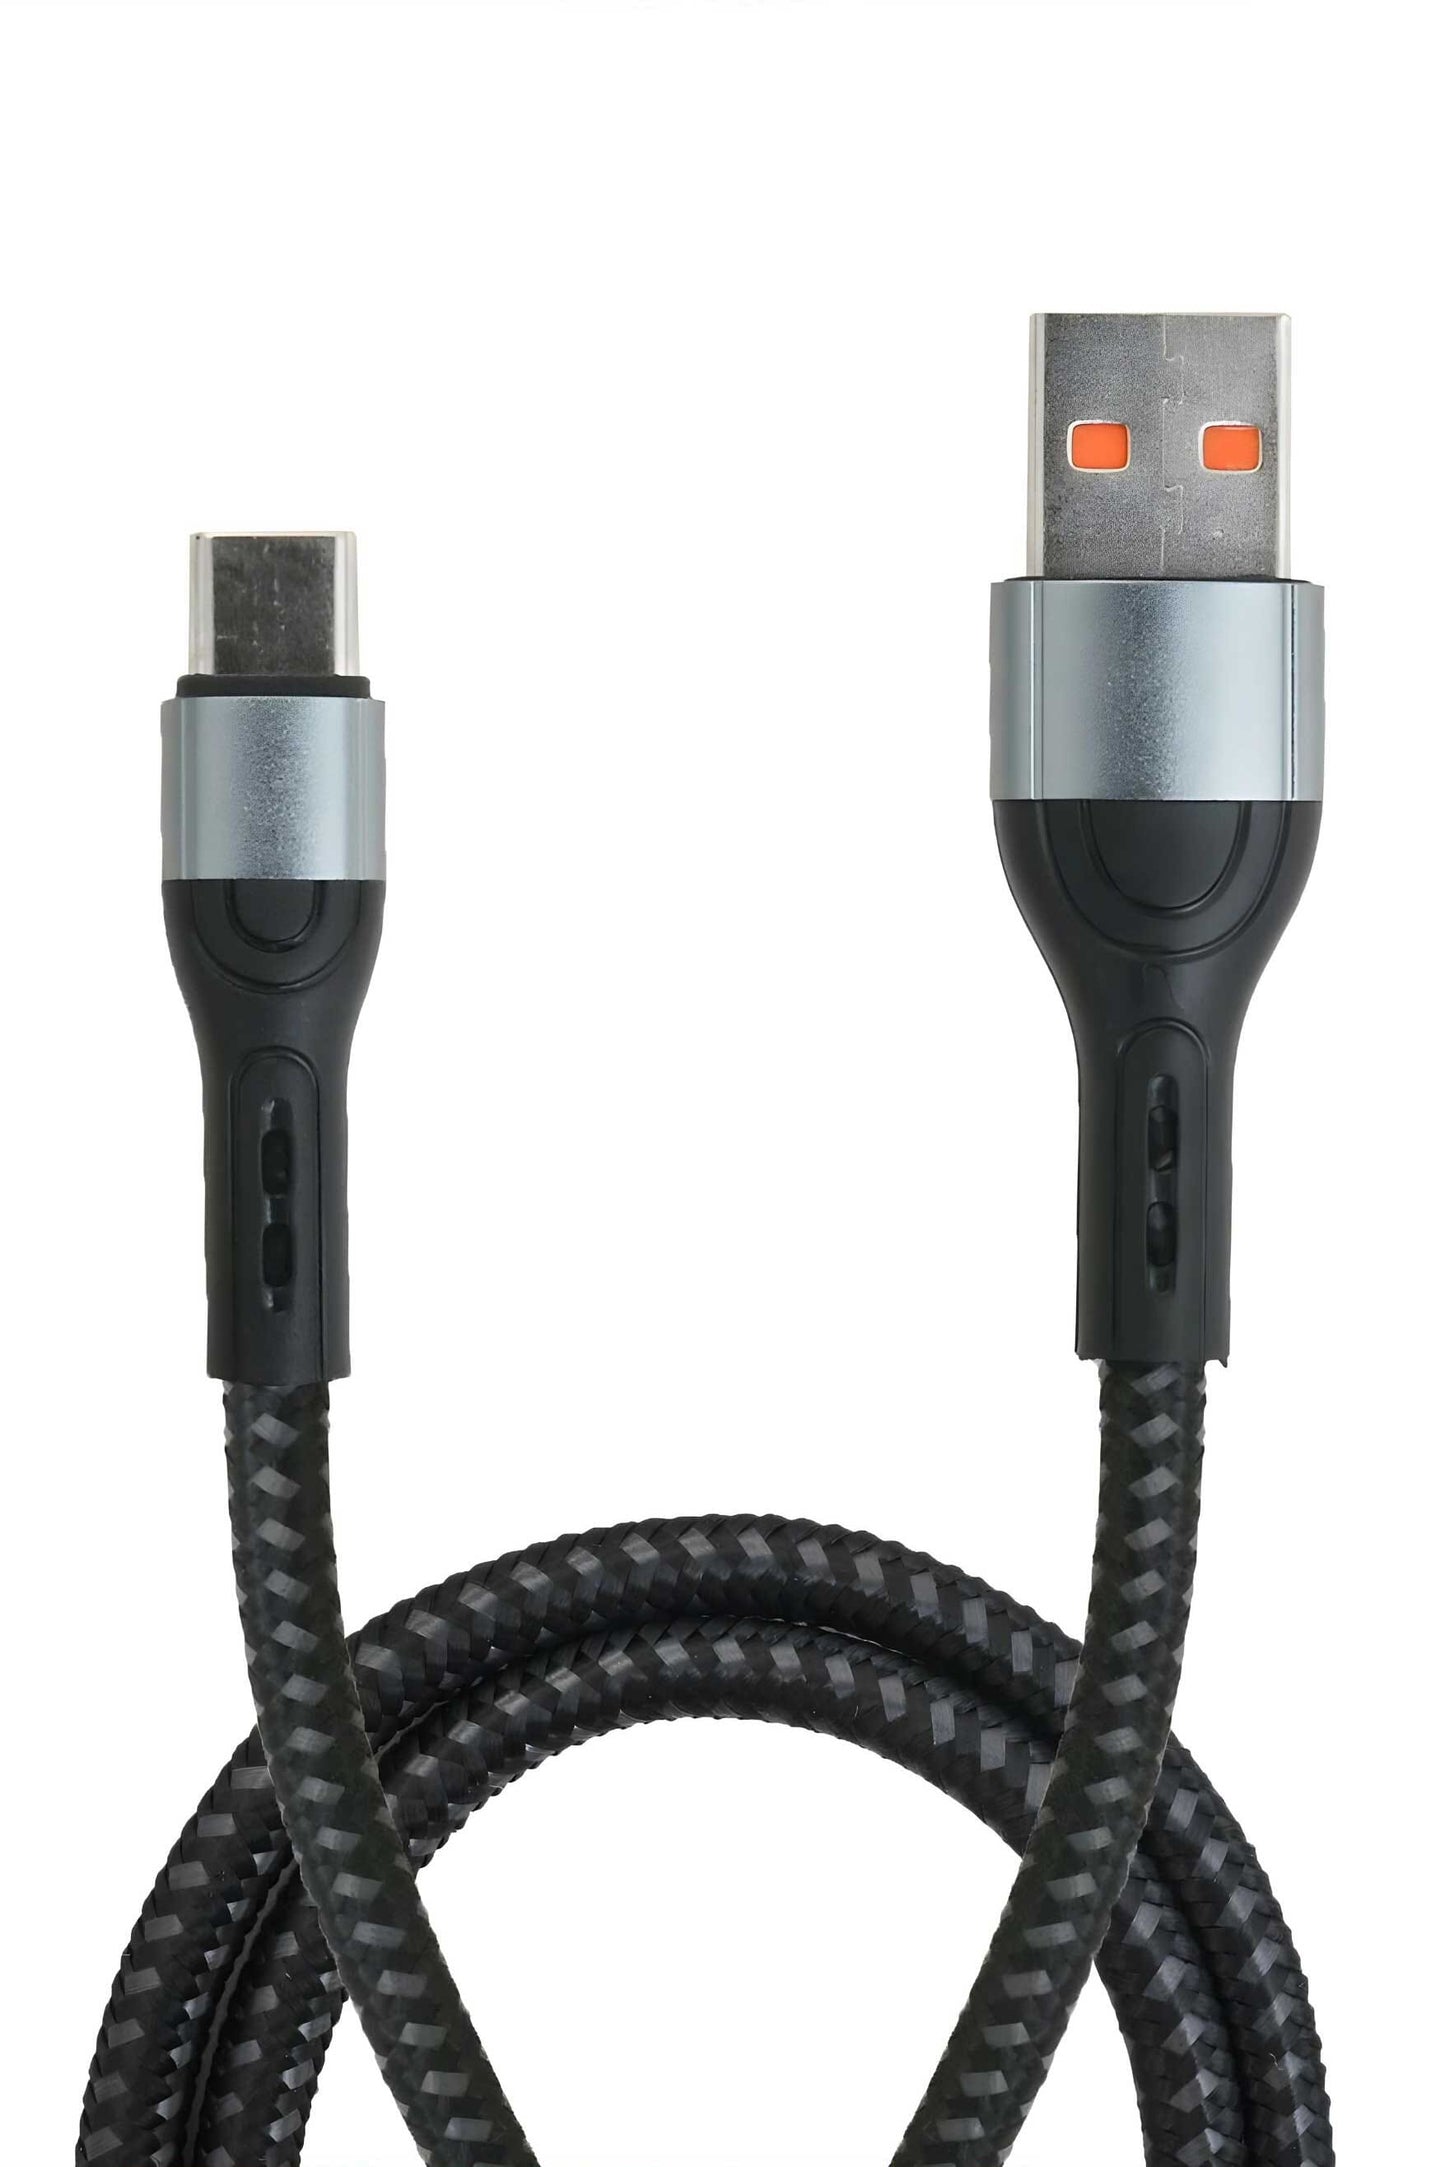 X Plus Type C Fast USB Charging Cable -1 Meter Mobile Accessories CPUS 